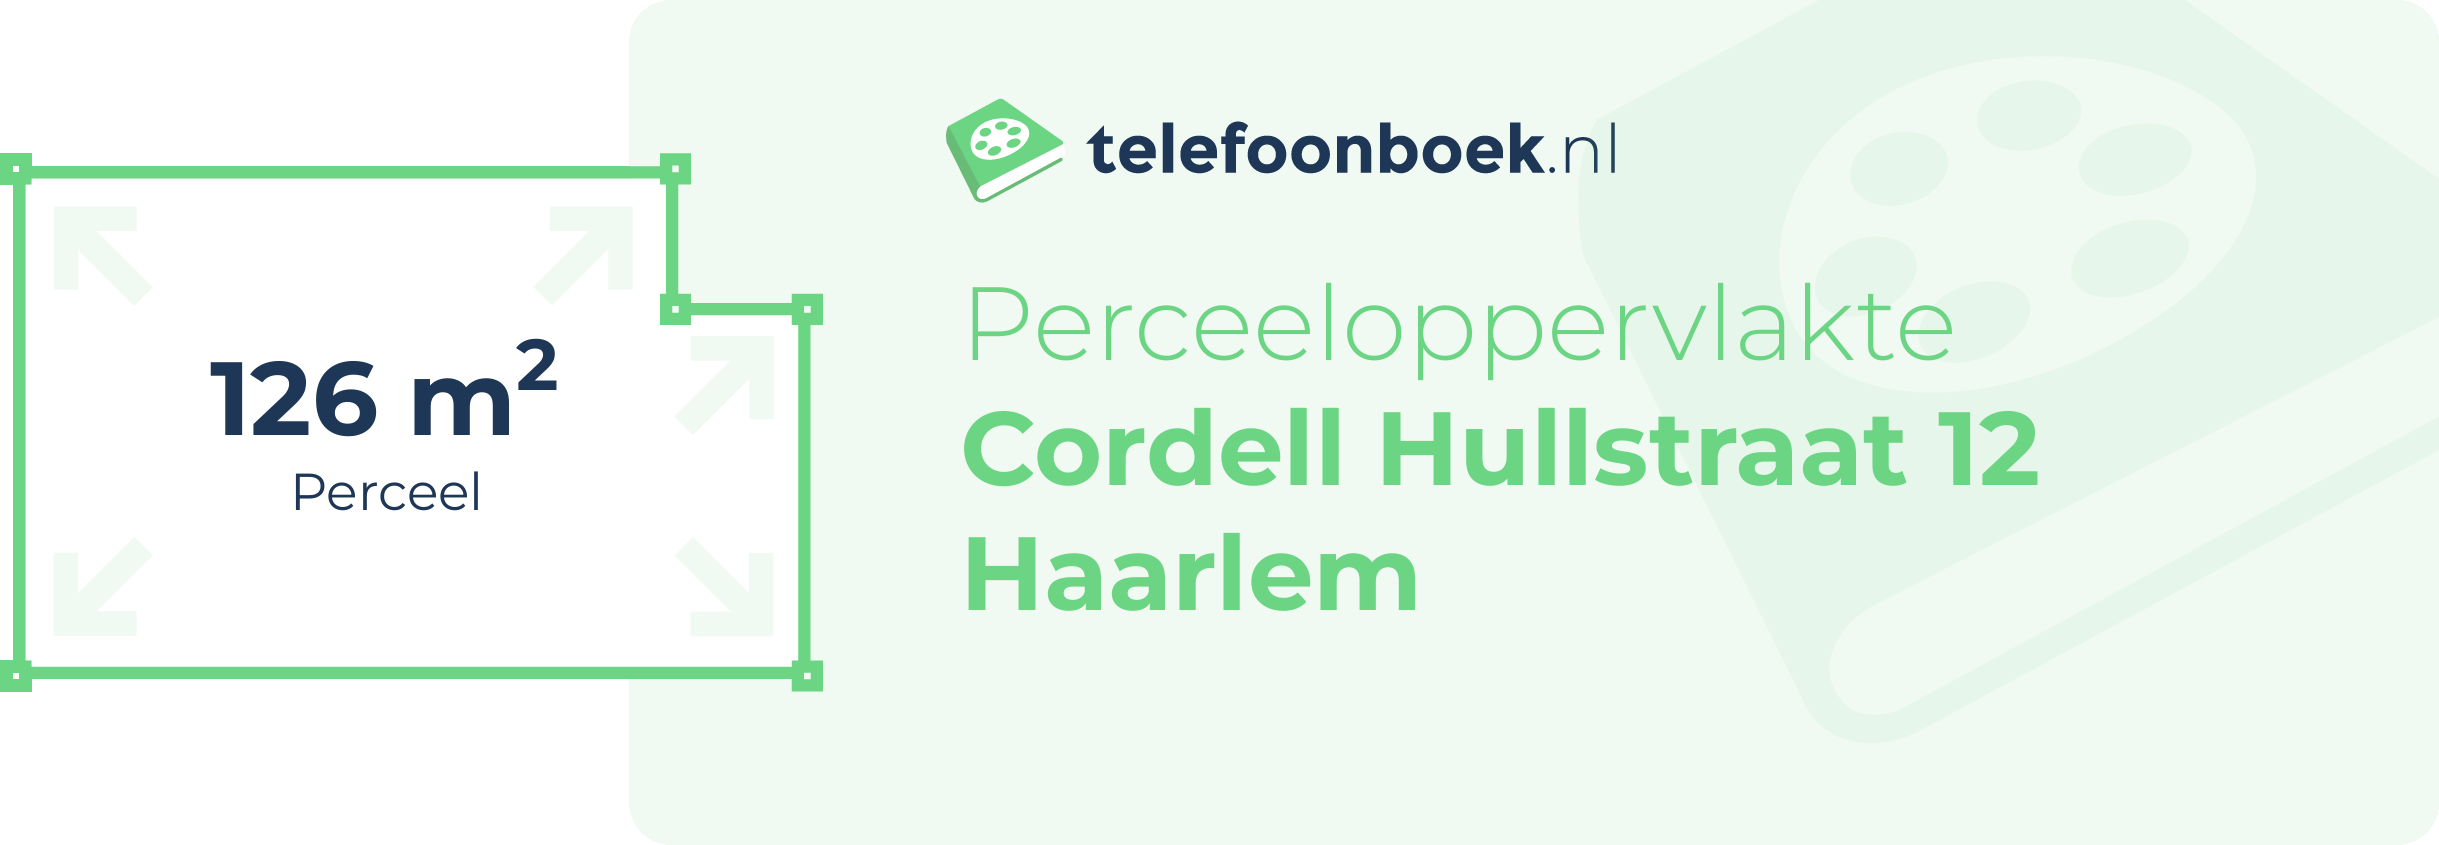 Perceeloppervlakte Cordell Hullstraat 12 Haarlem